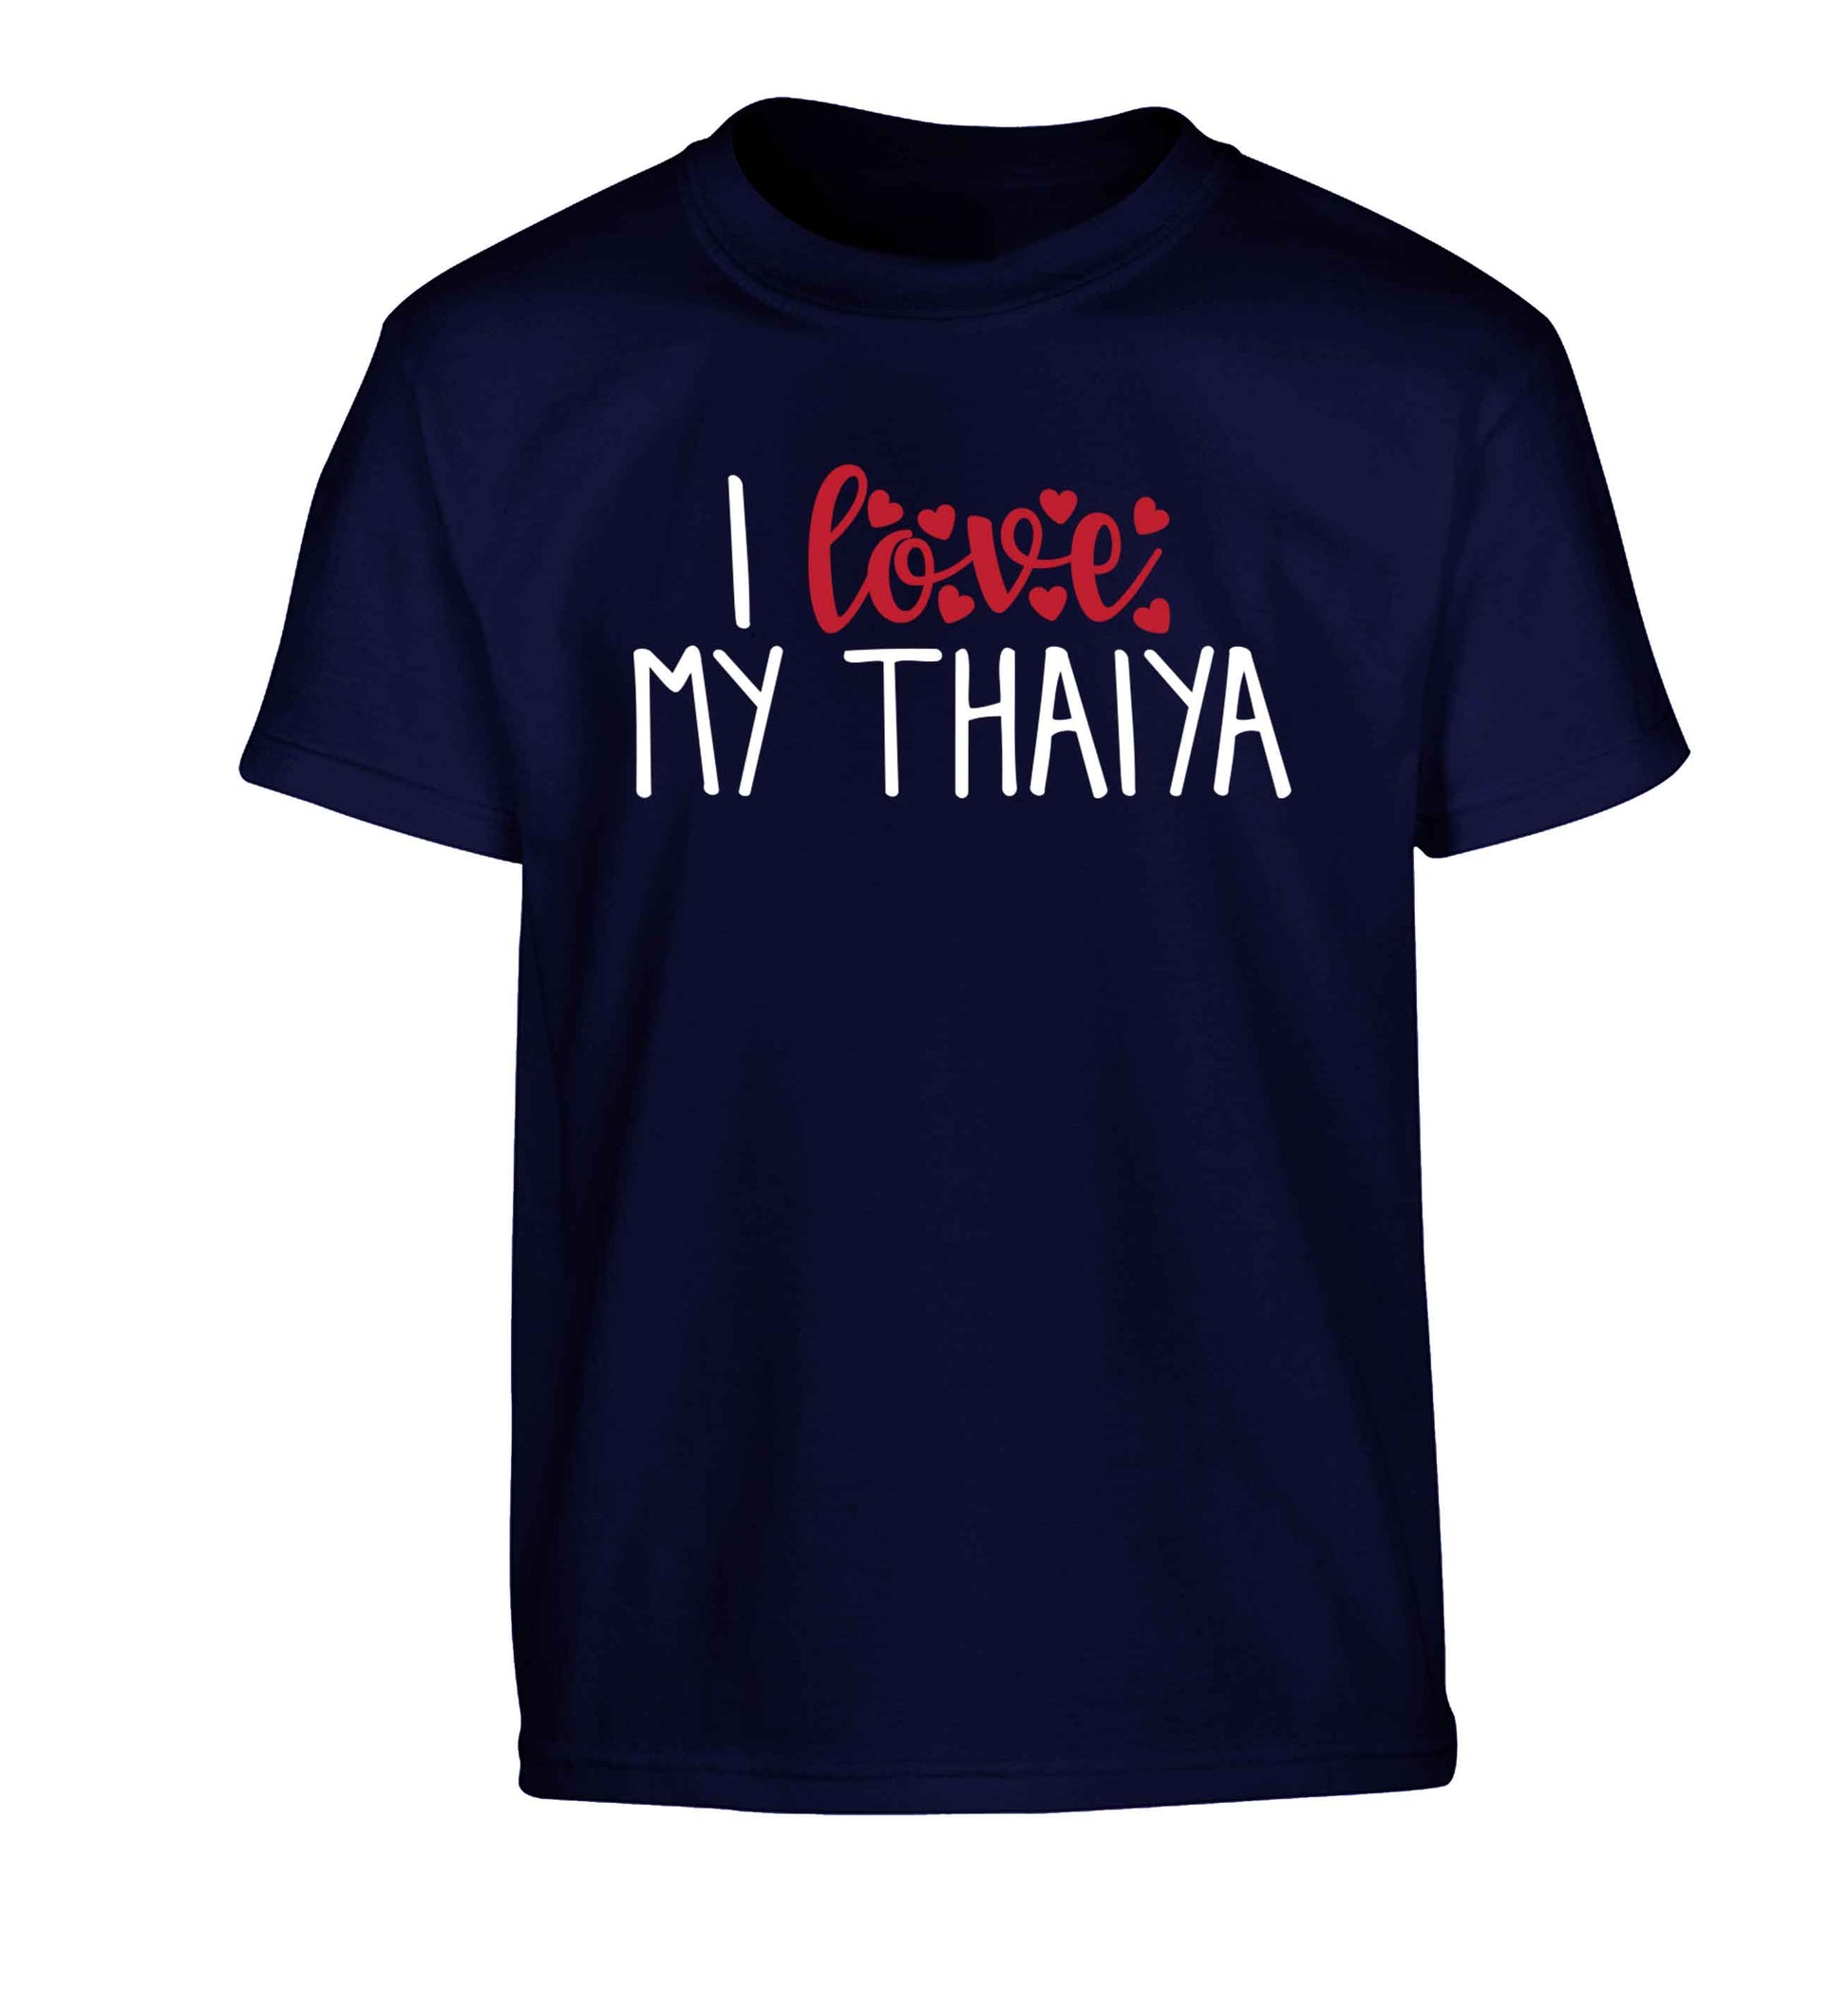 I love my thaiya Children's navy Tshirt 12-13 Years